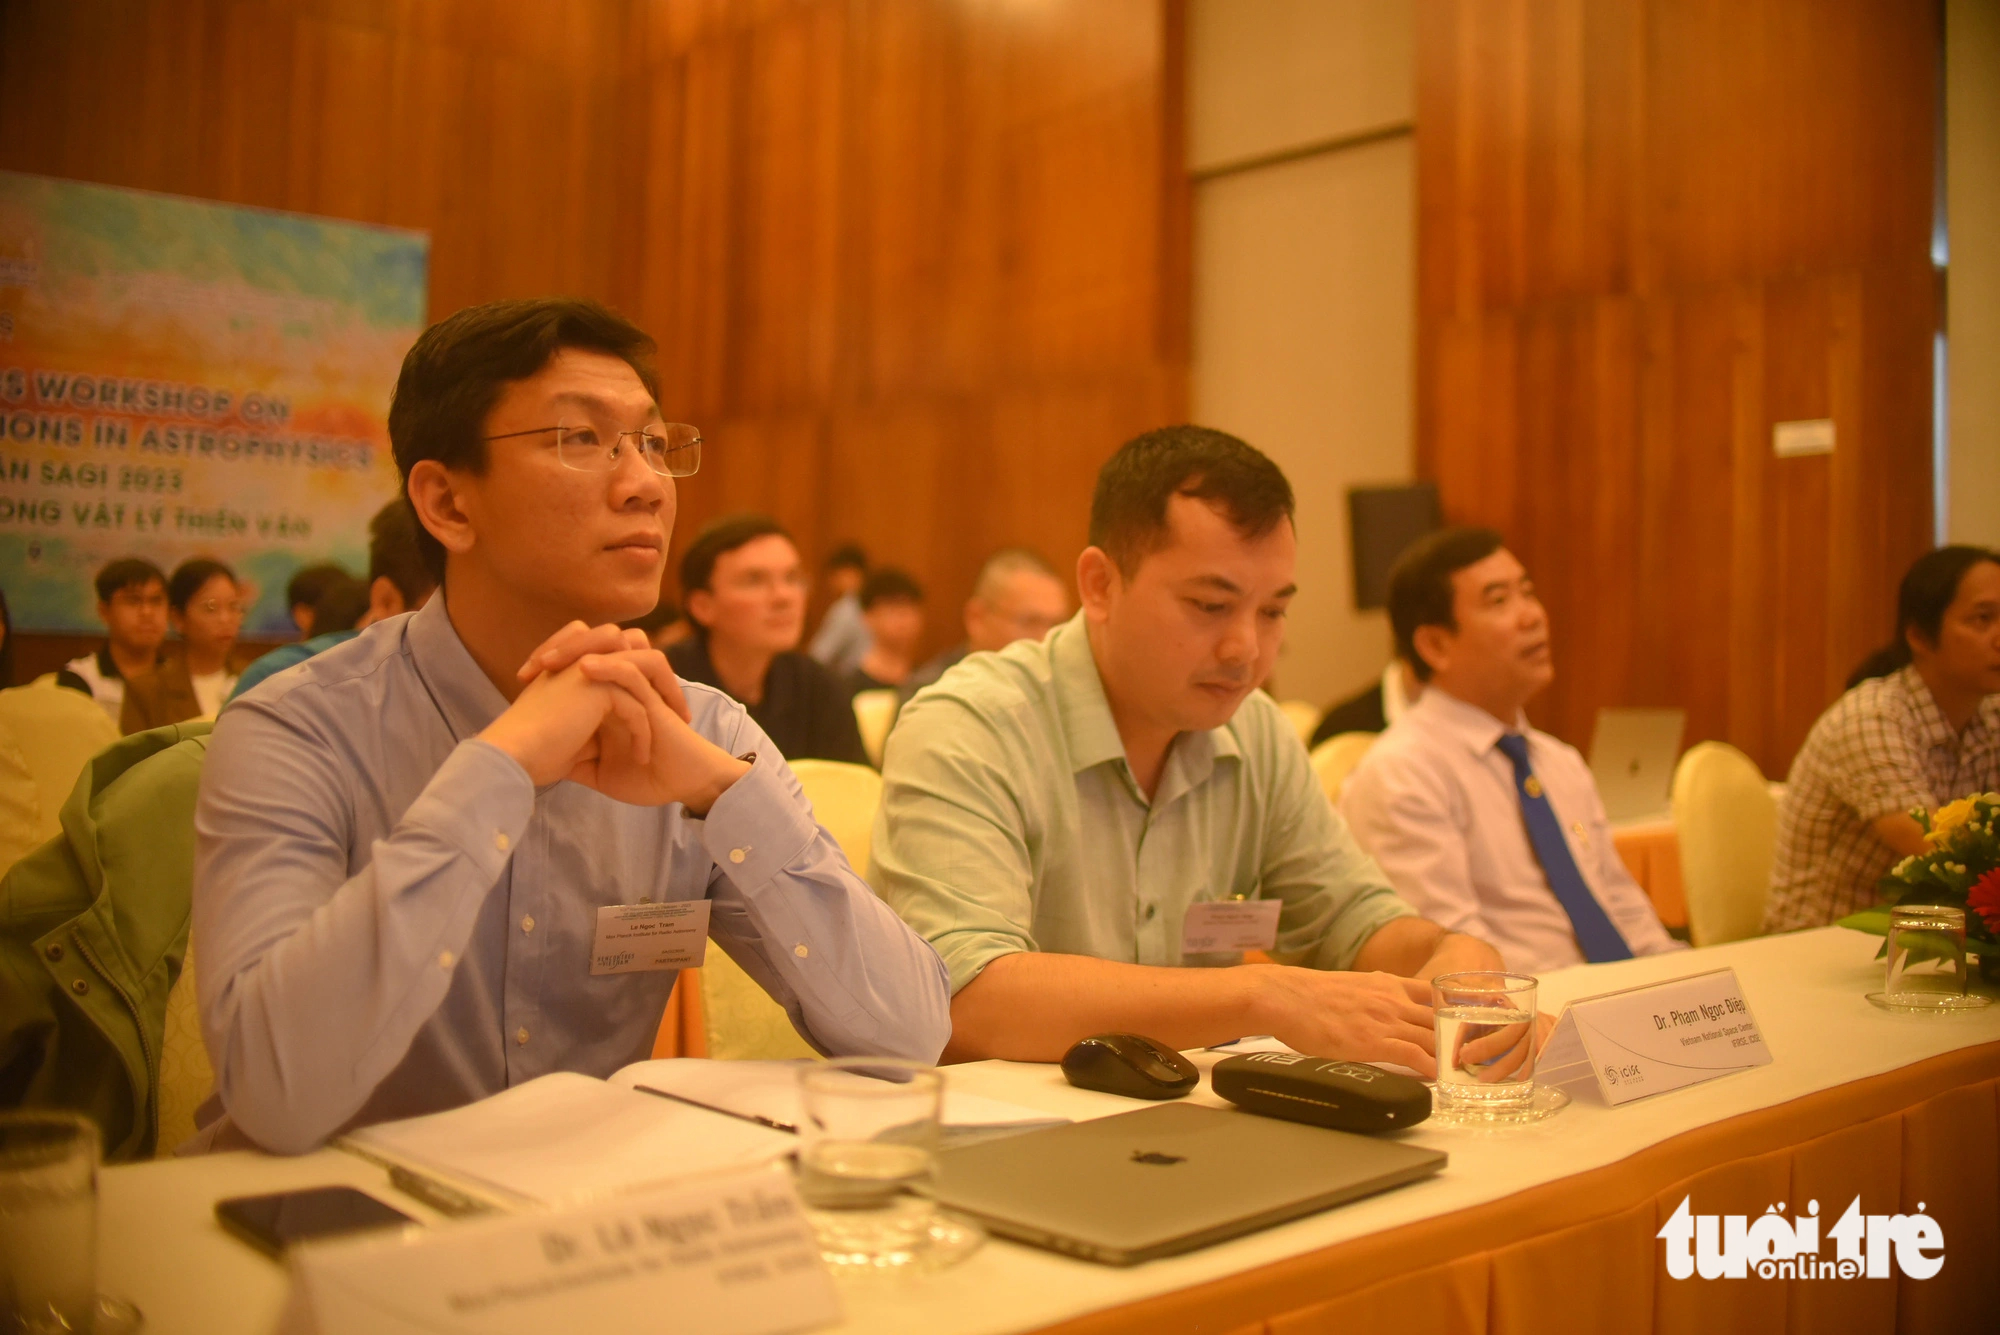 Over 50 int’l scientists gather for astrophysics workshop in Vietnam